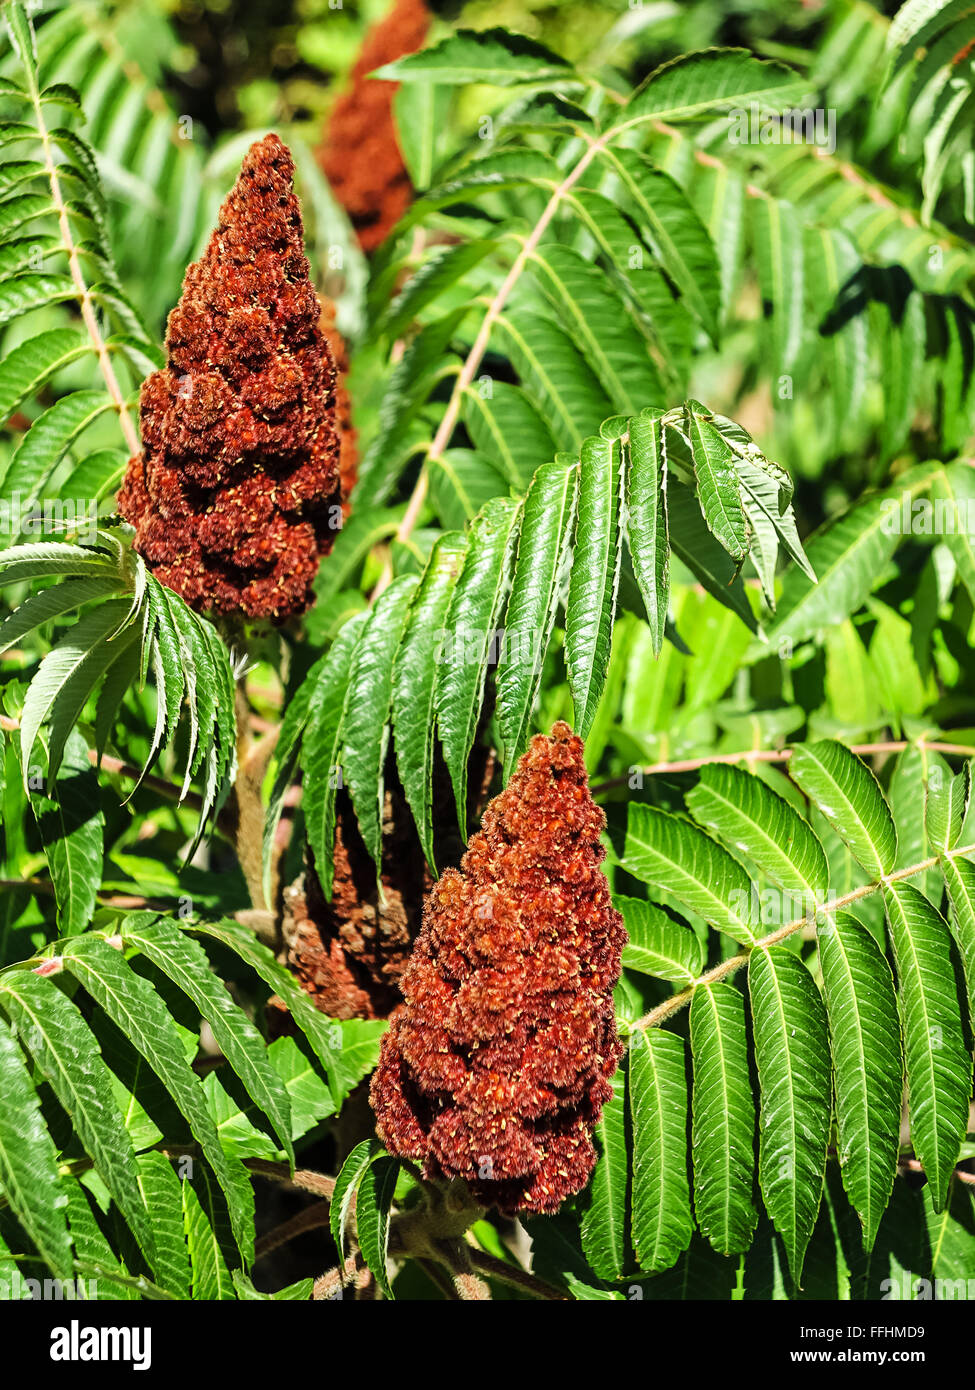 Staghorn sumac or velvet sumac (Rhus typhina) in a tropical garden Stock Photo